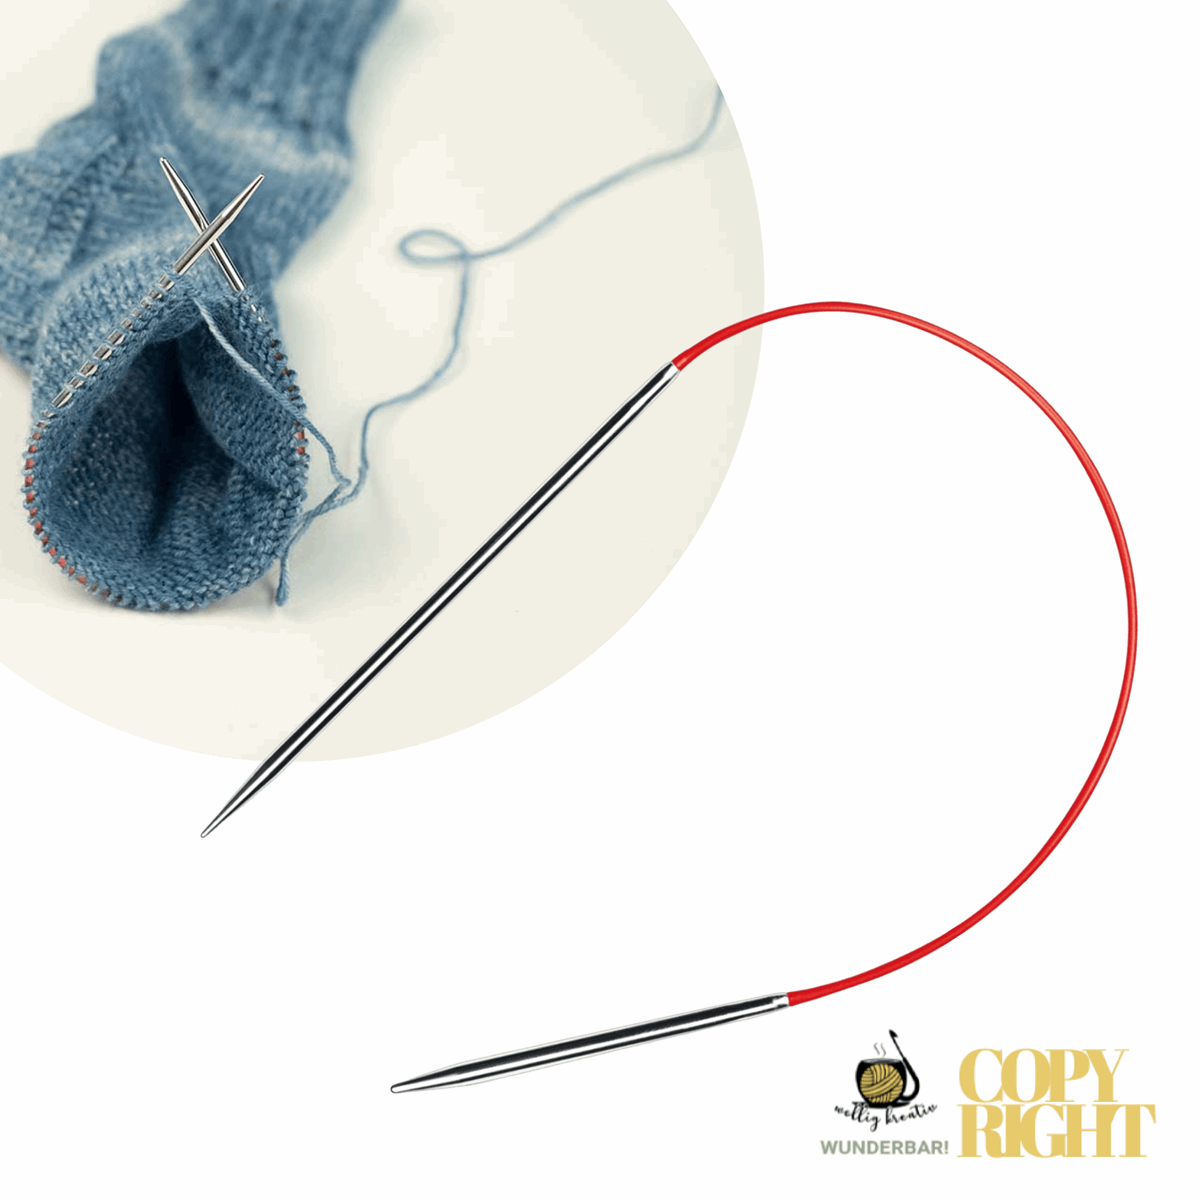 Addi, Sockwunder Lace mini circular knitting needle, 67107, size 2.5, length 25cm